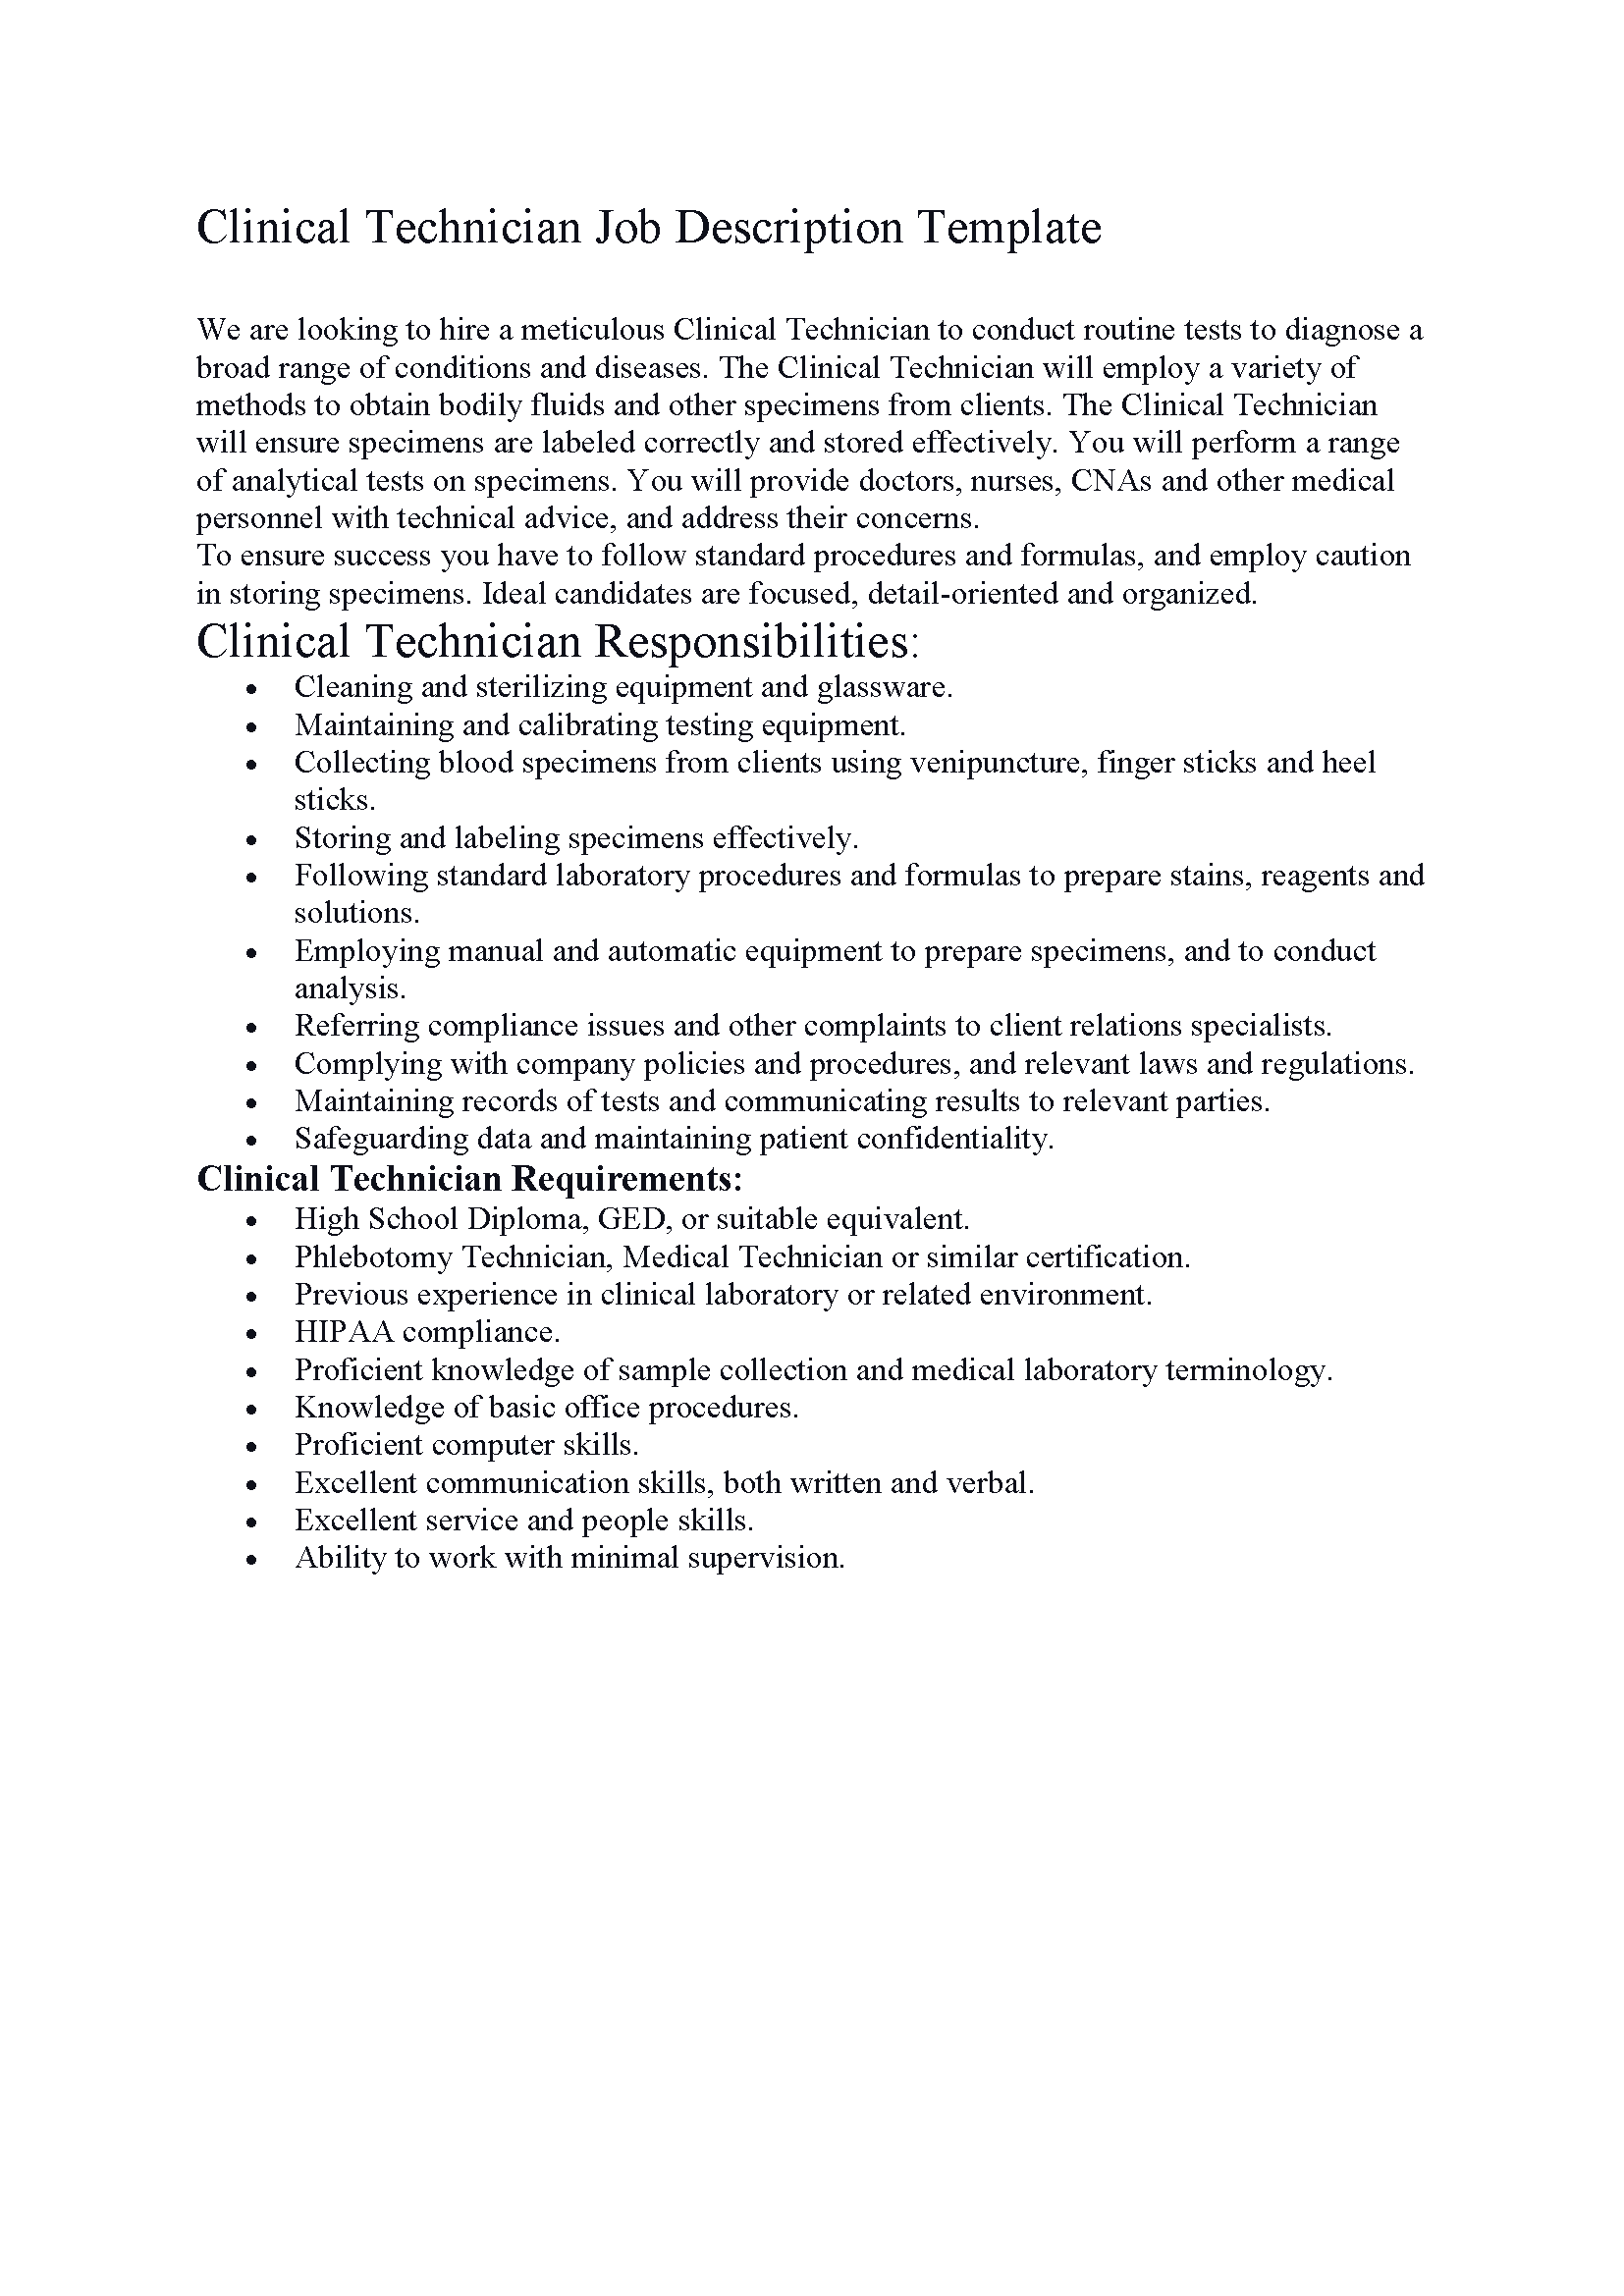 Clinical Technician Job Description Template